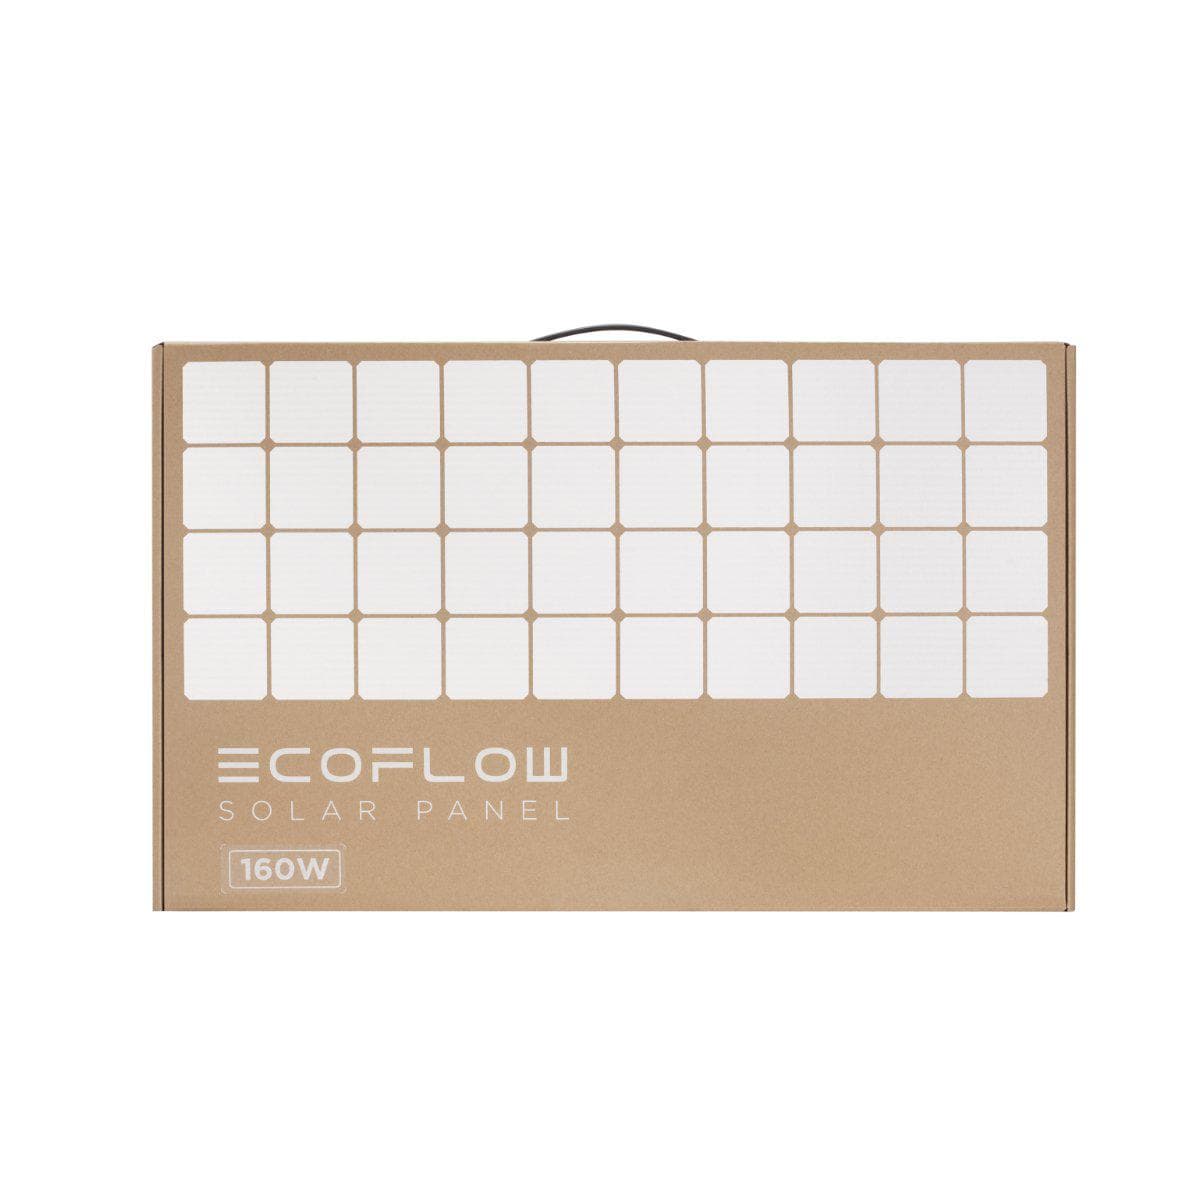 EcoFlow 160W Solar Panel (Costco Sale)